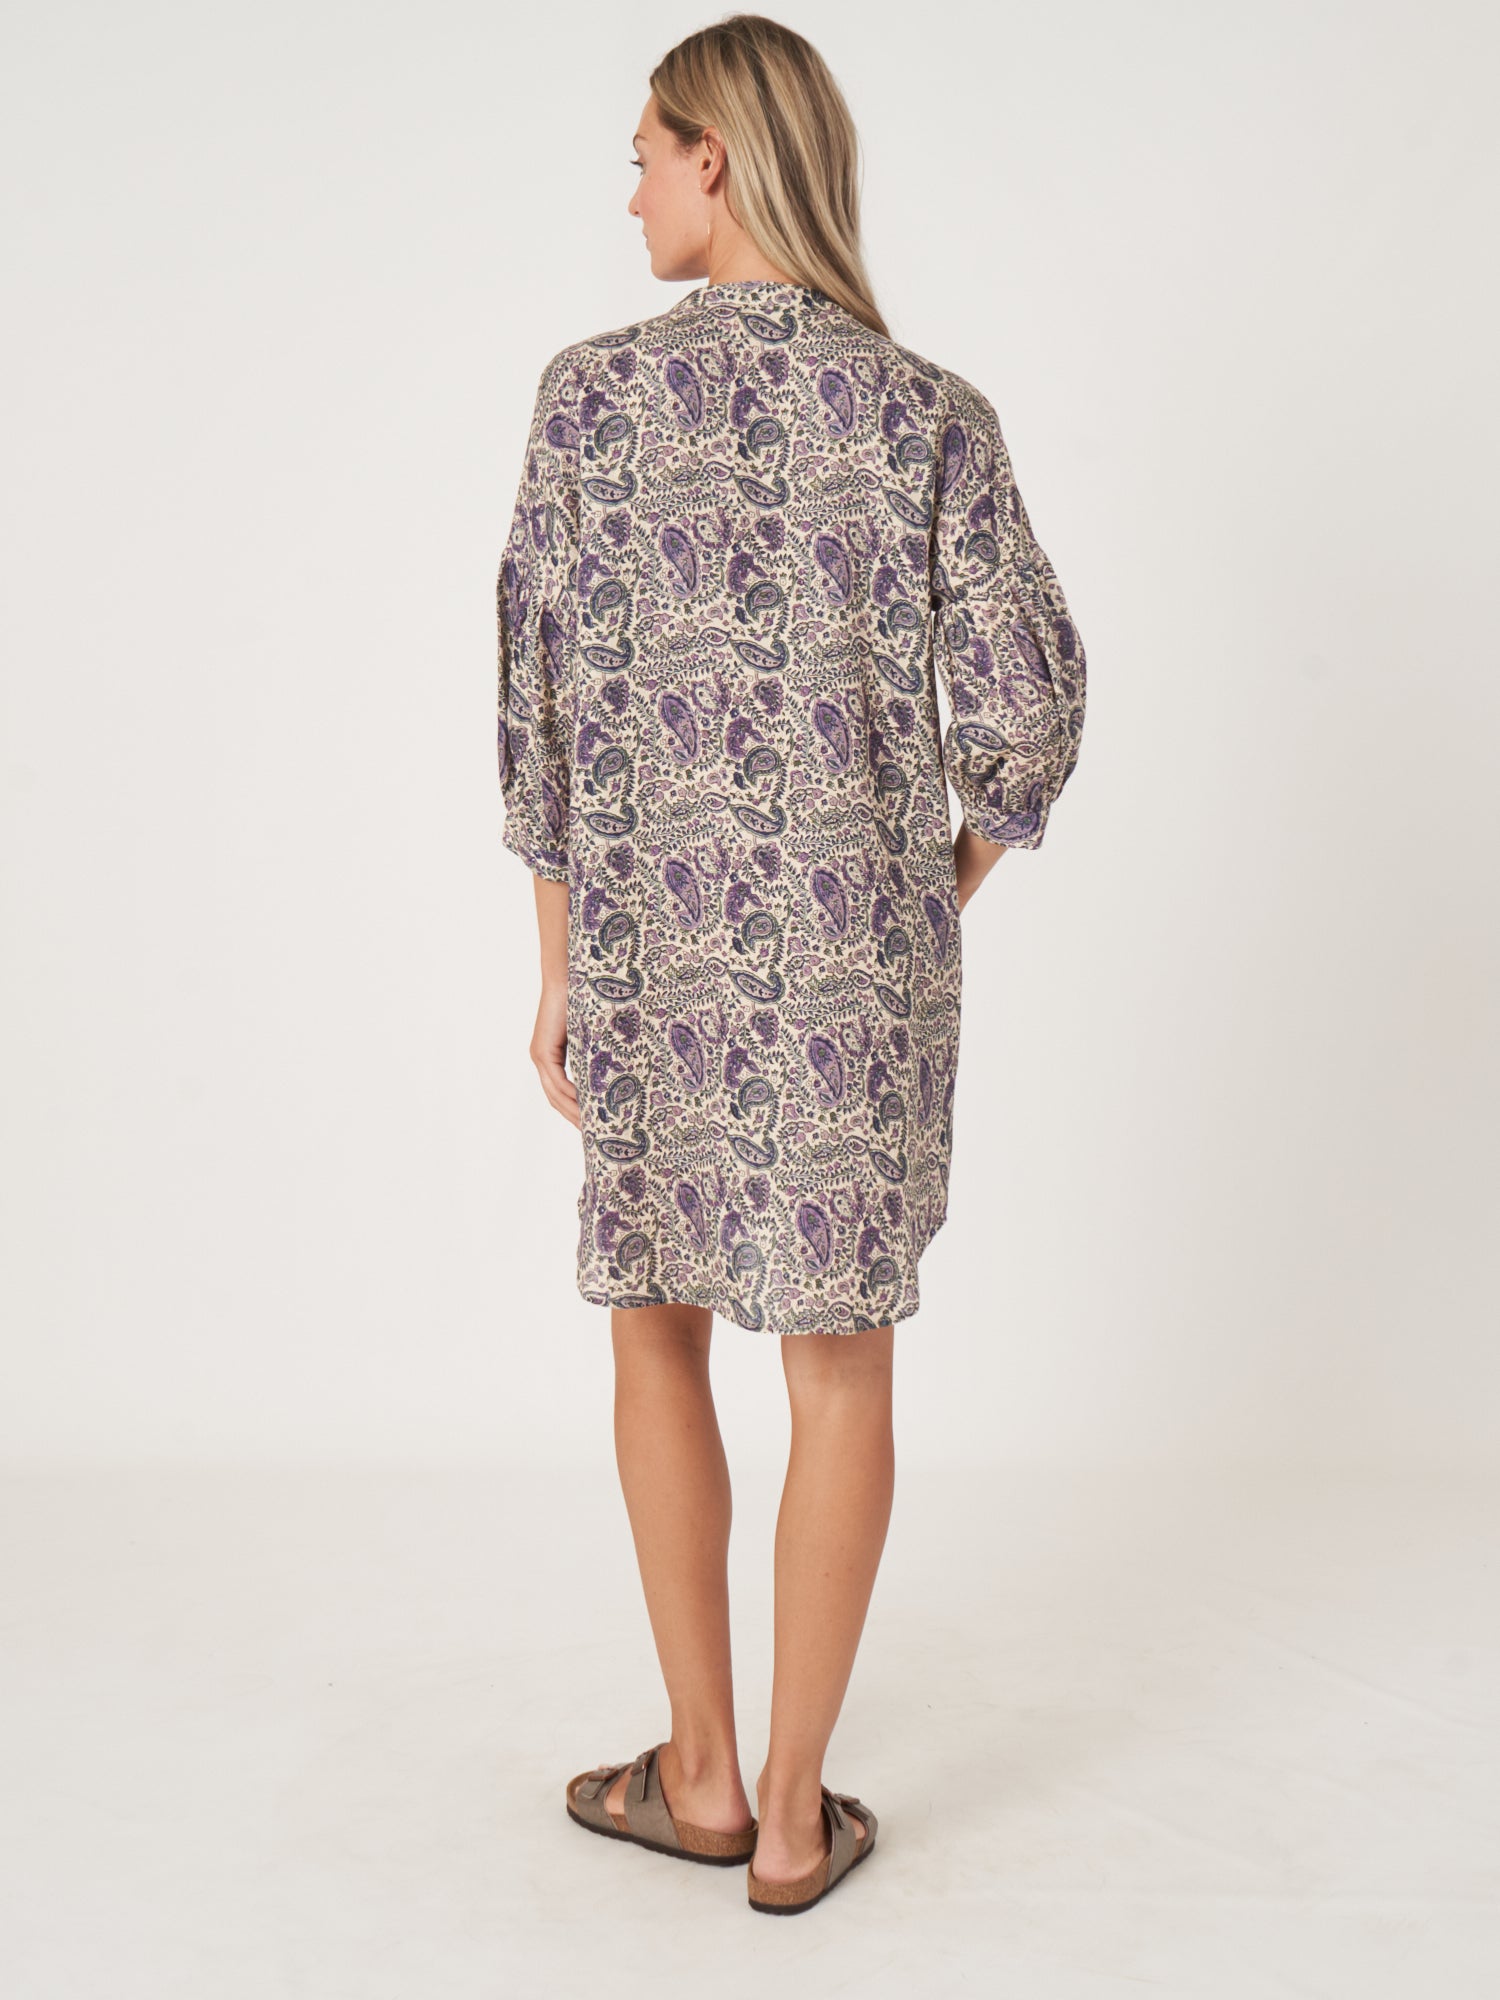 Paisley Print woven Dress